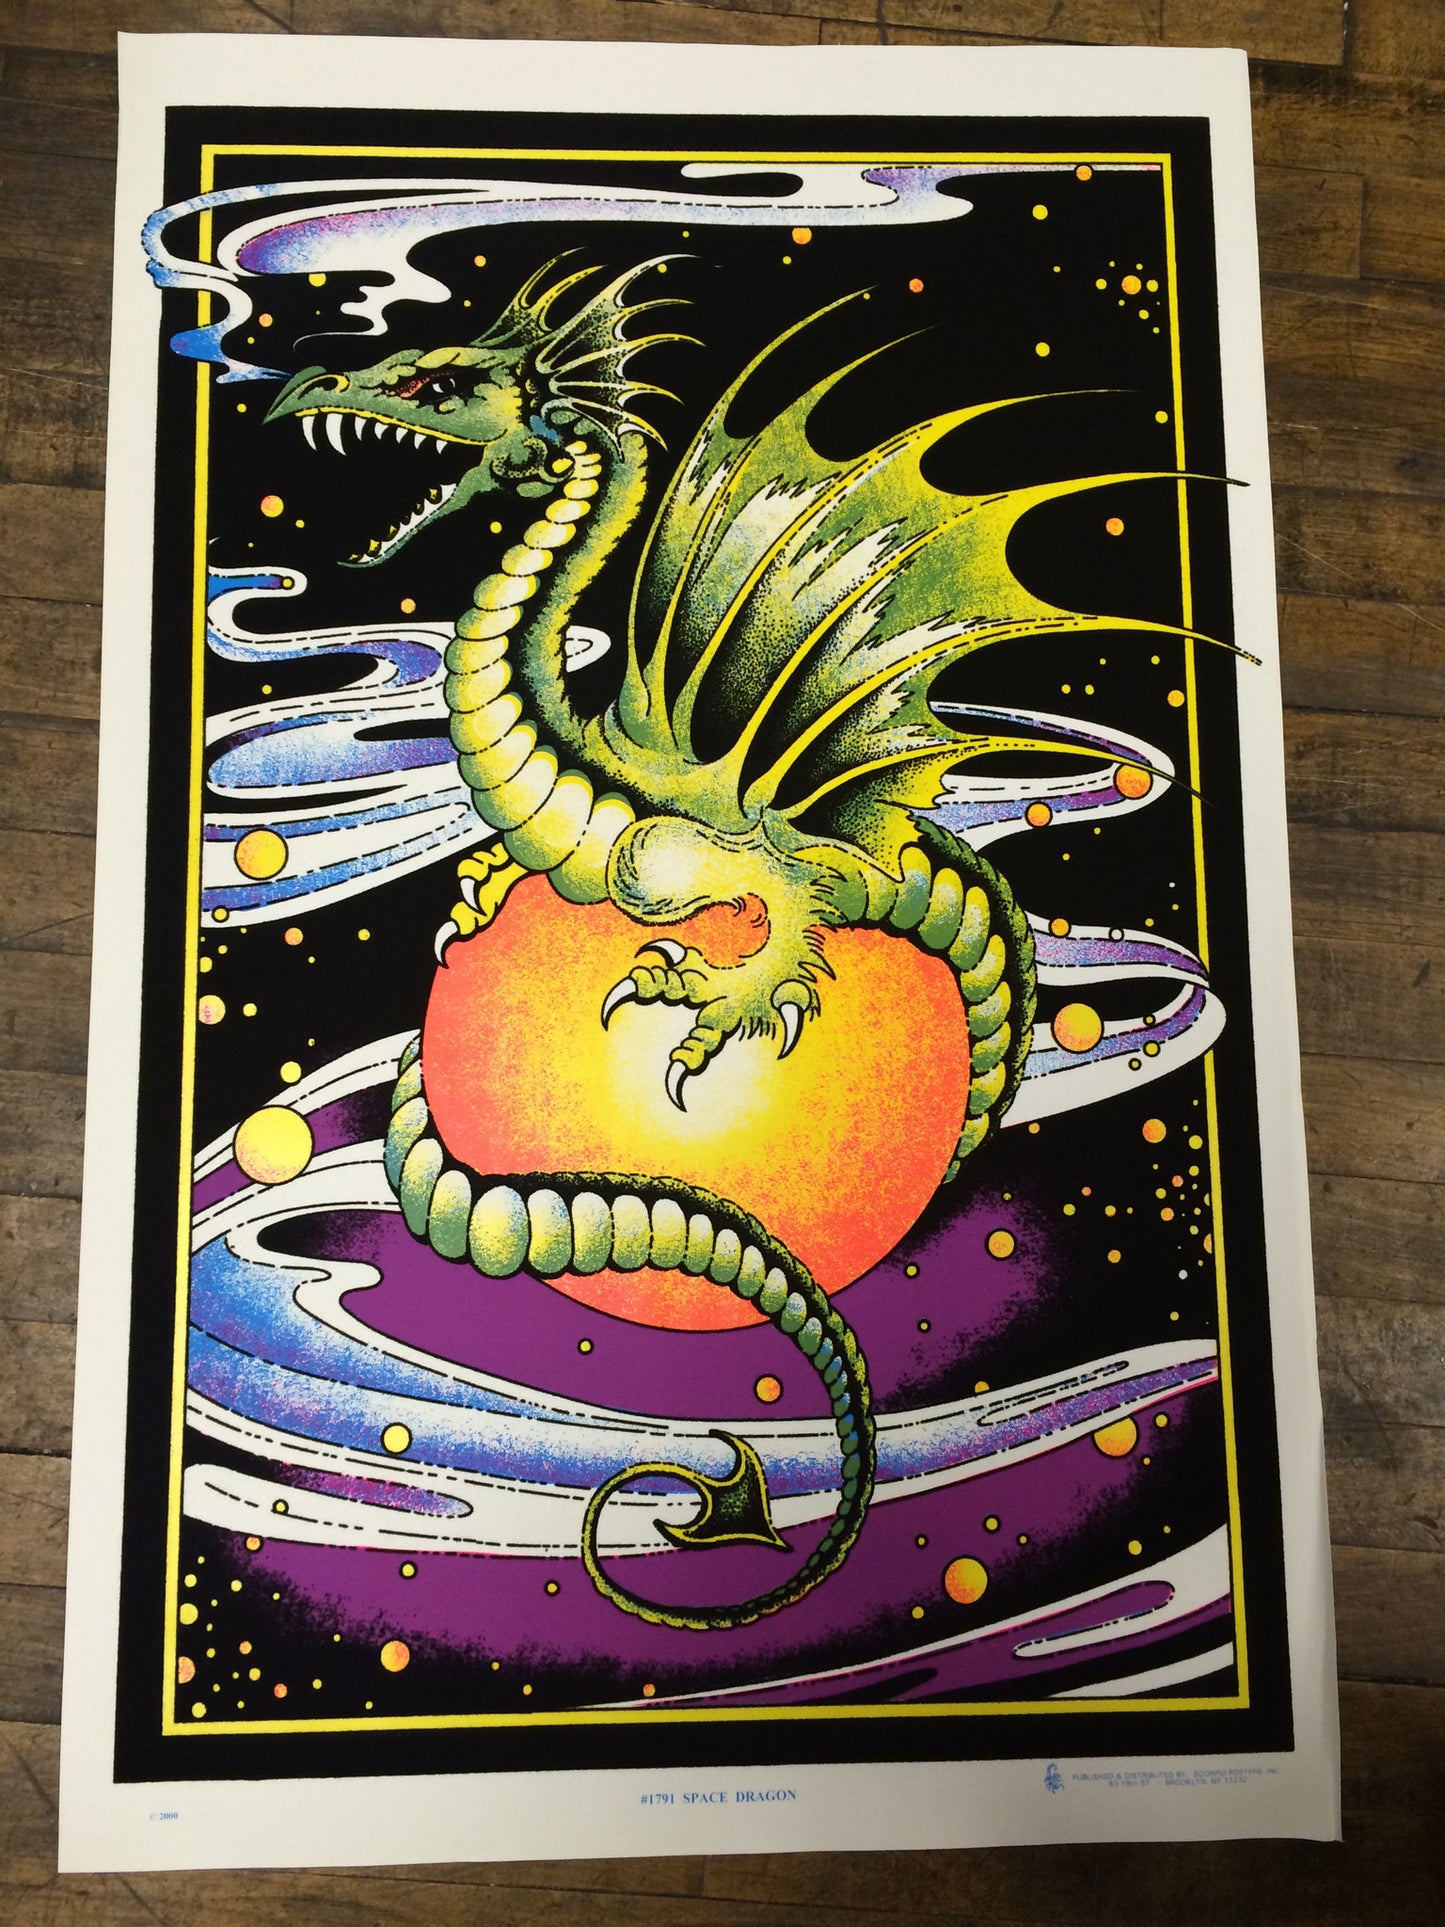 Felt Black Light Poster - 2000 - Space Dragon